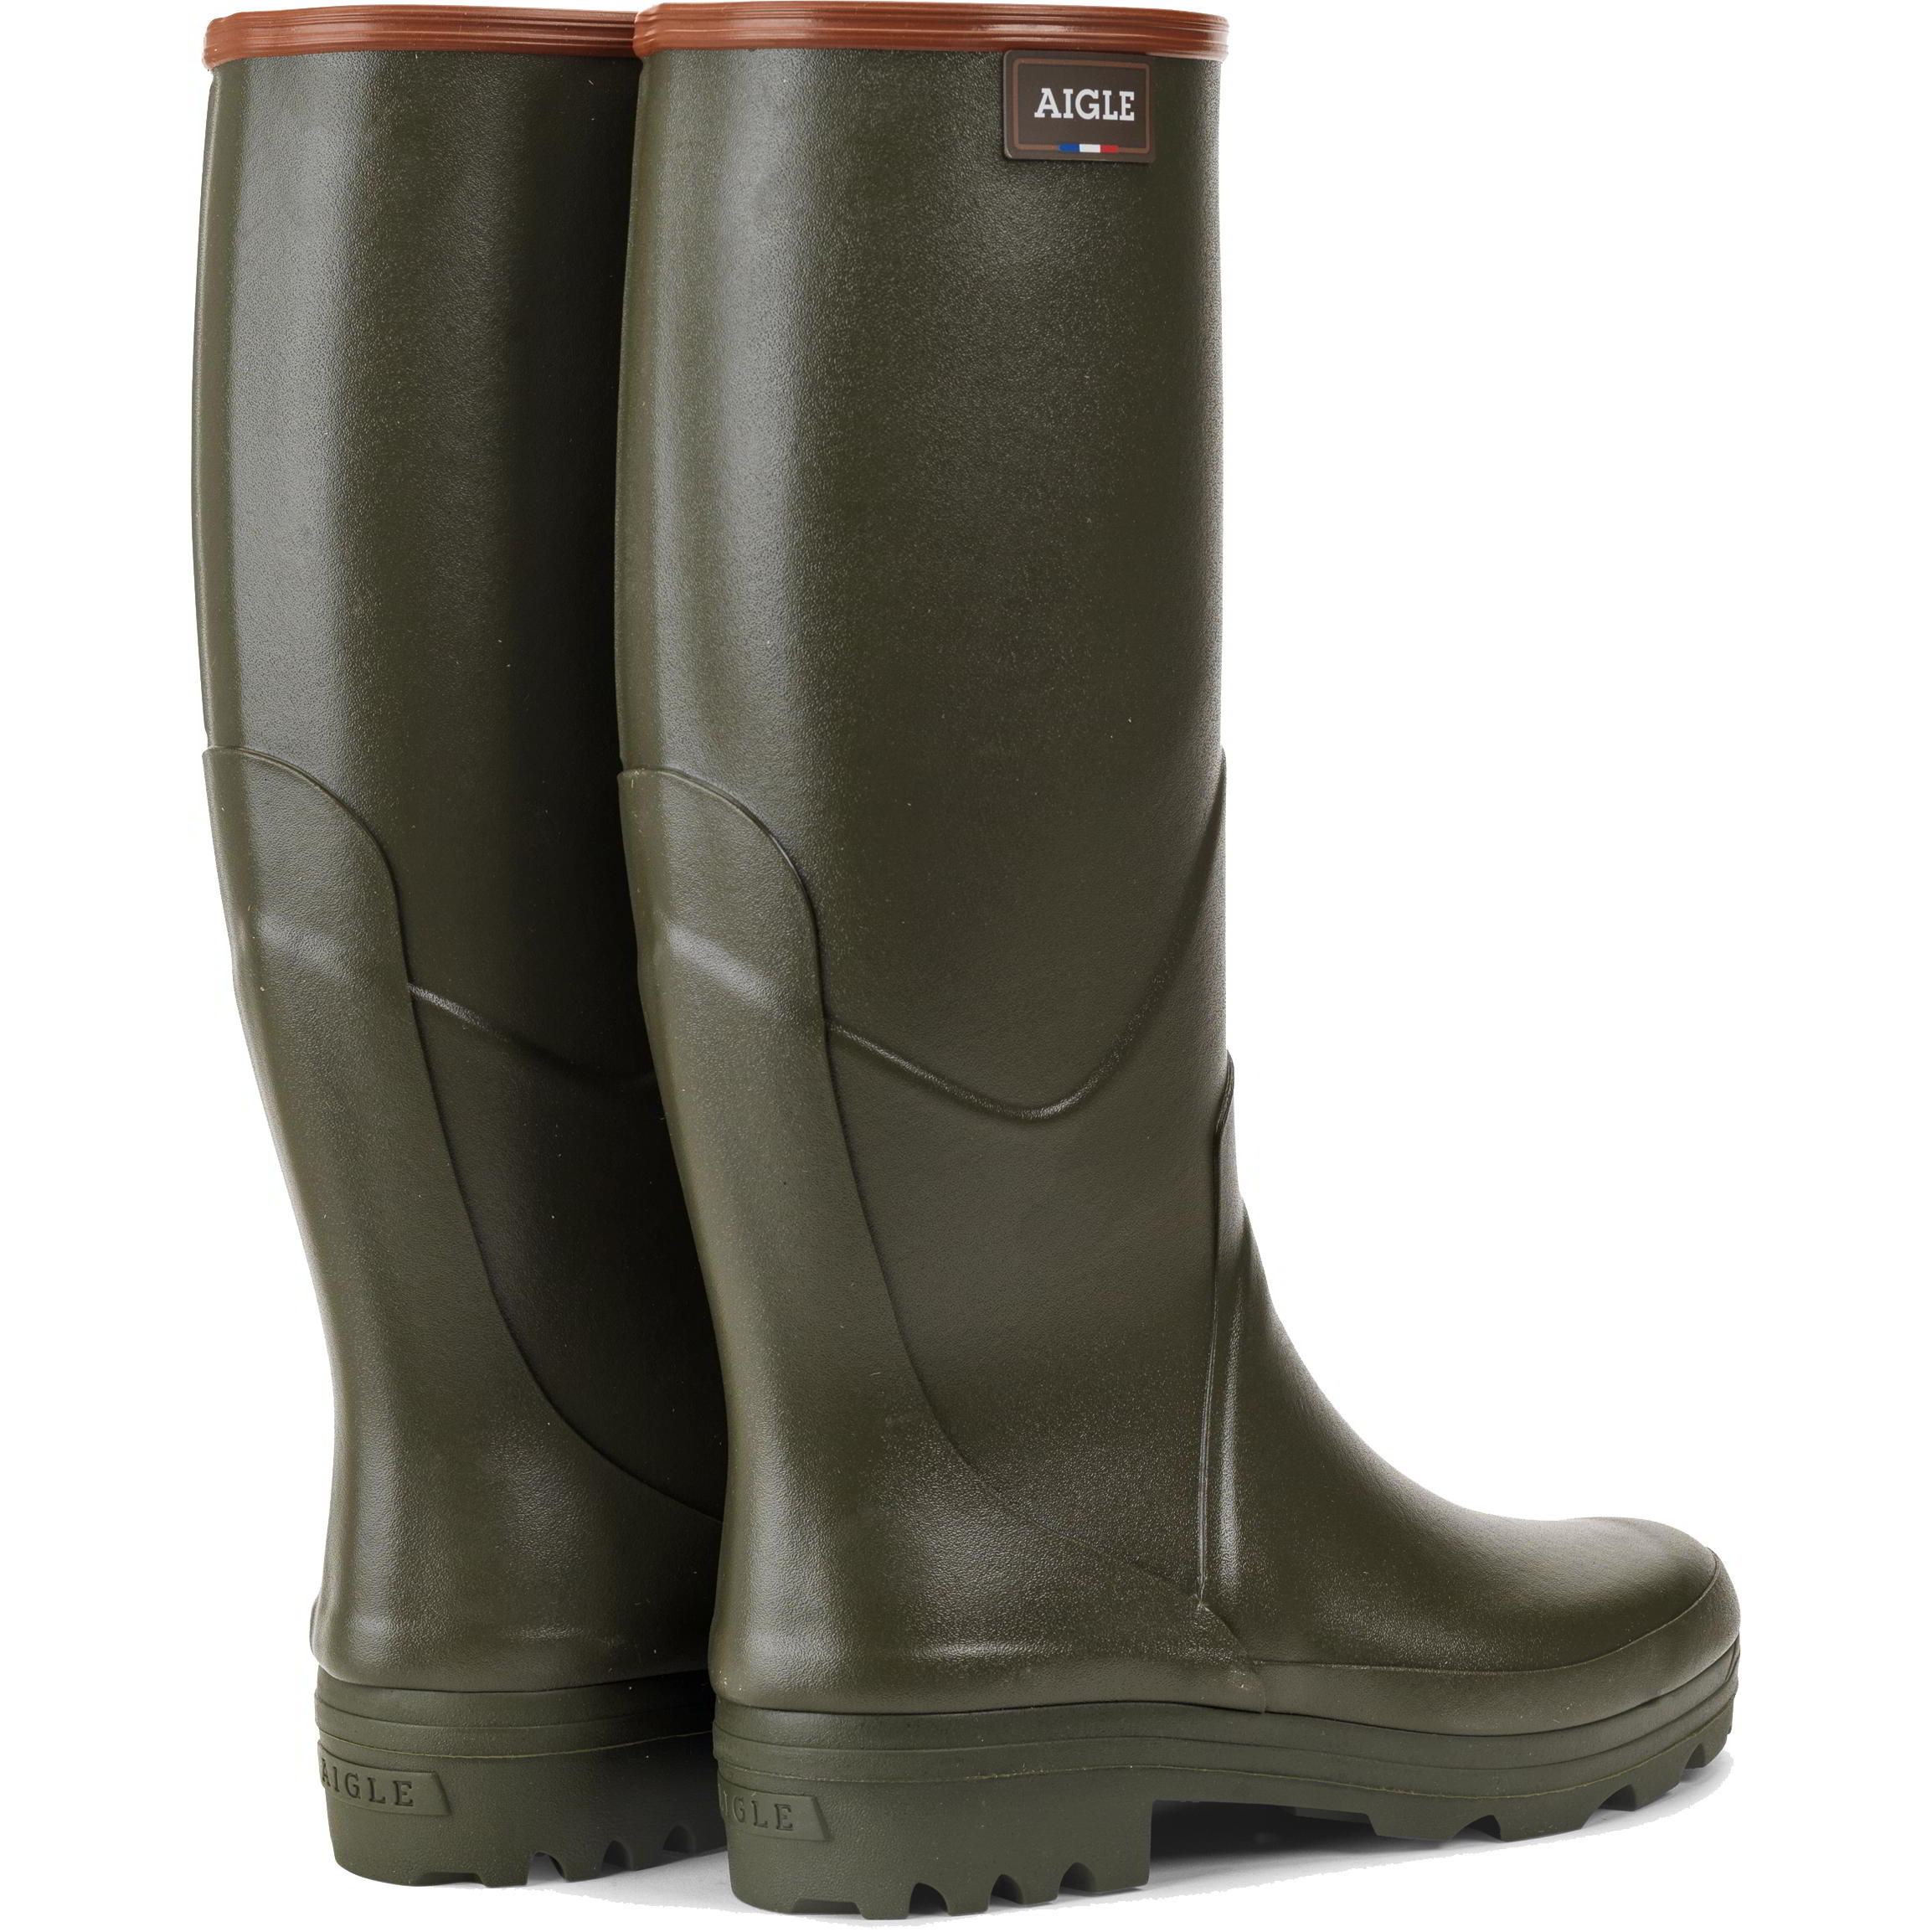 Aigle Mens Chambord Pro 2 Wellies Rain Boots - UK 8 Green 2951